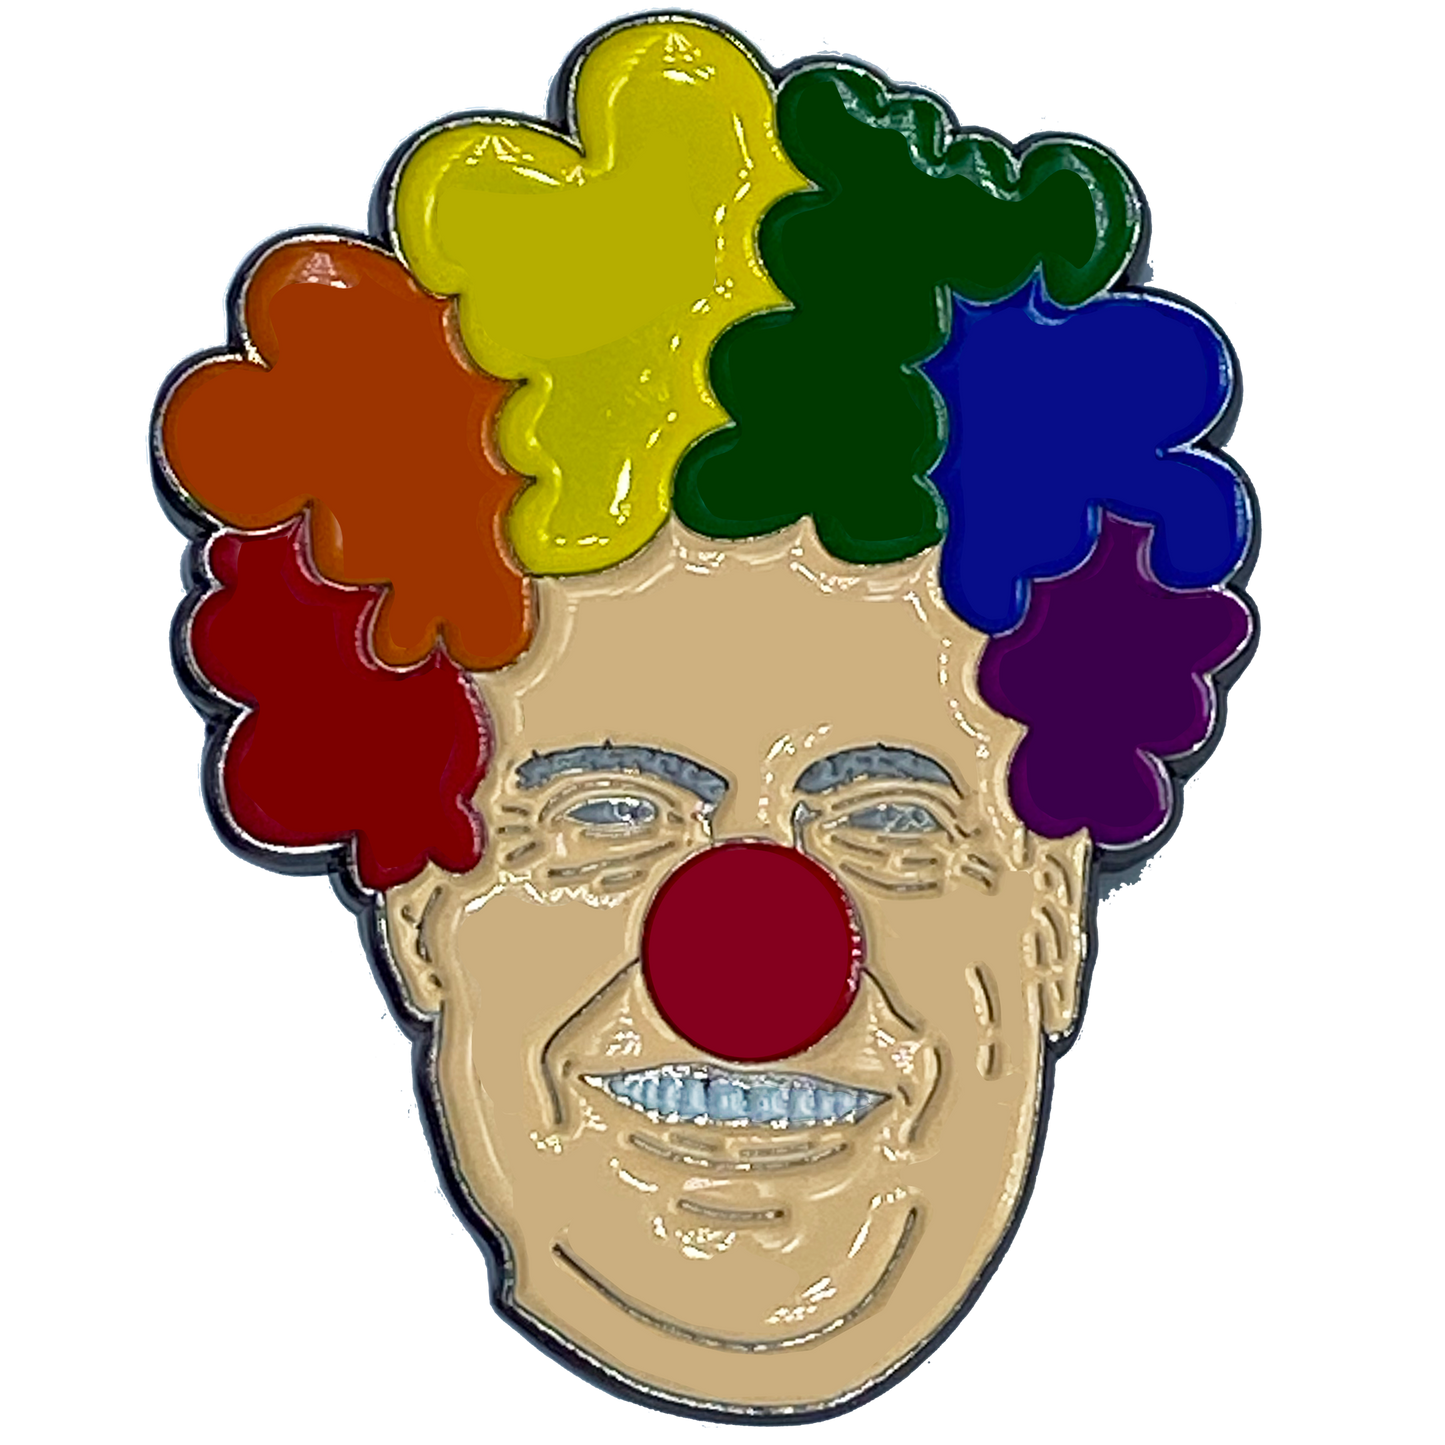 DL4-14 Mayor Bill DeBlasio Clown Pin NYC NYPD